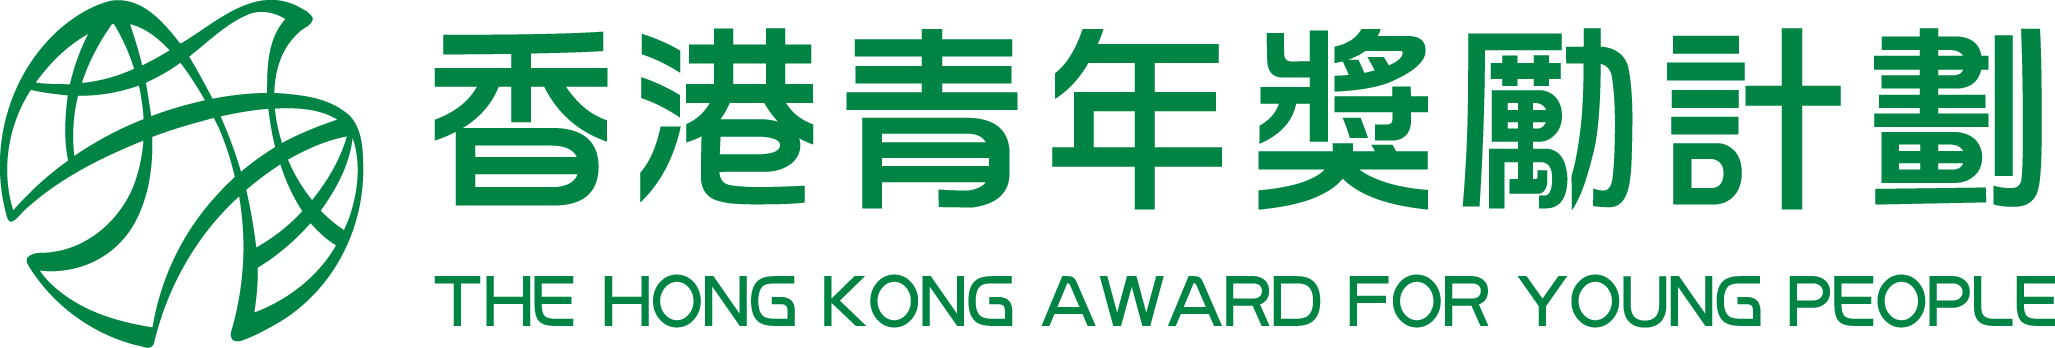 AYP logo with name (H_green)-1